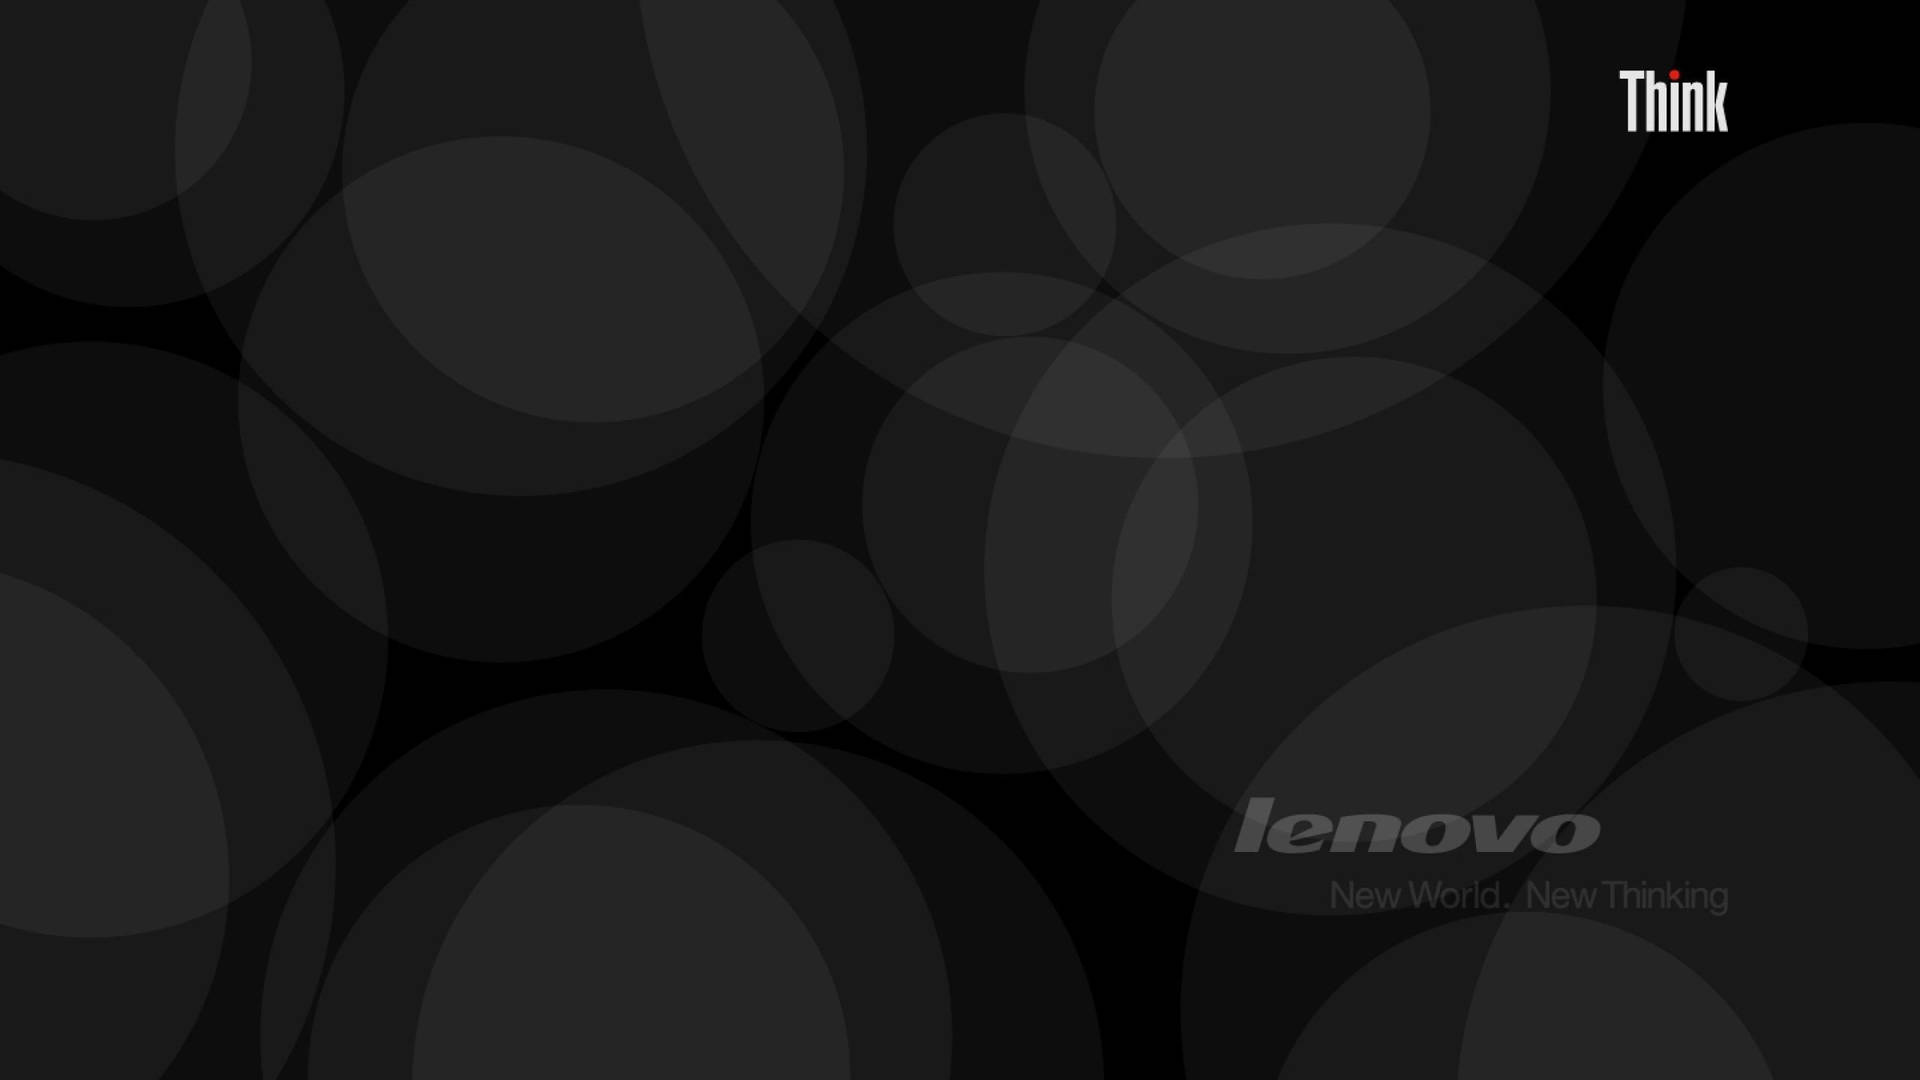 Free Lenovo Hd Wallpaper Downloads, [200+] Lenovo Hd Wallpapers for FREE |  